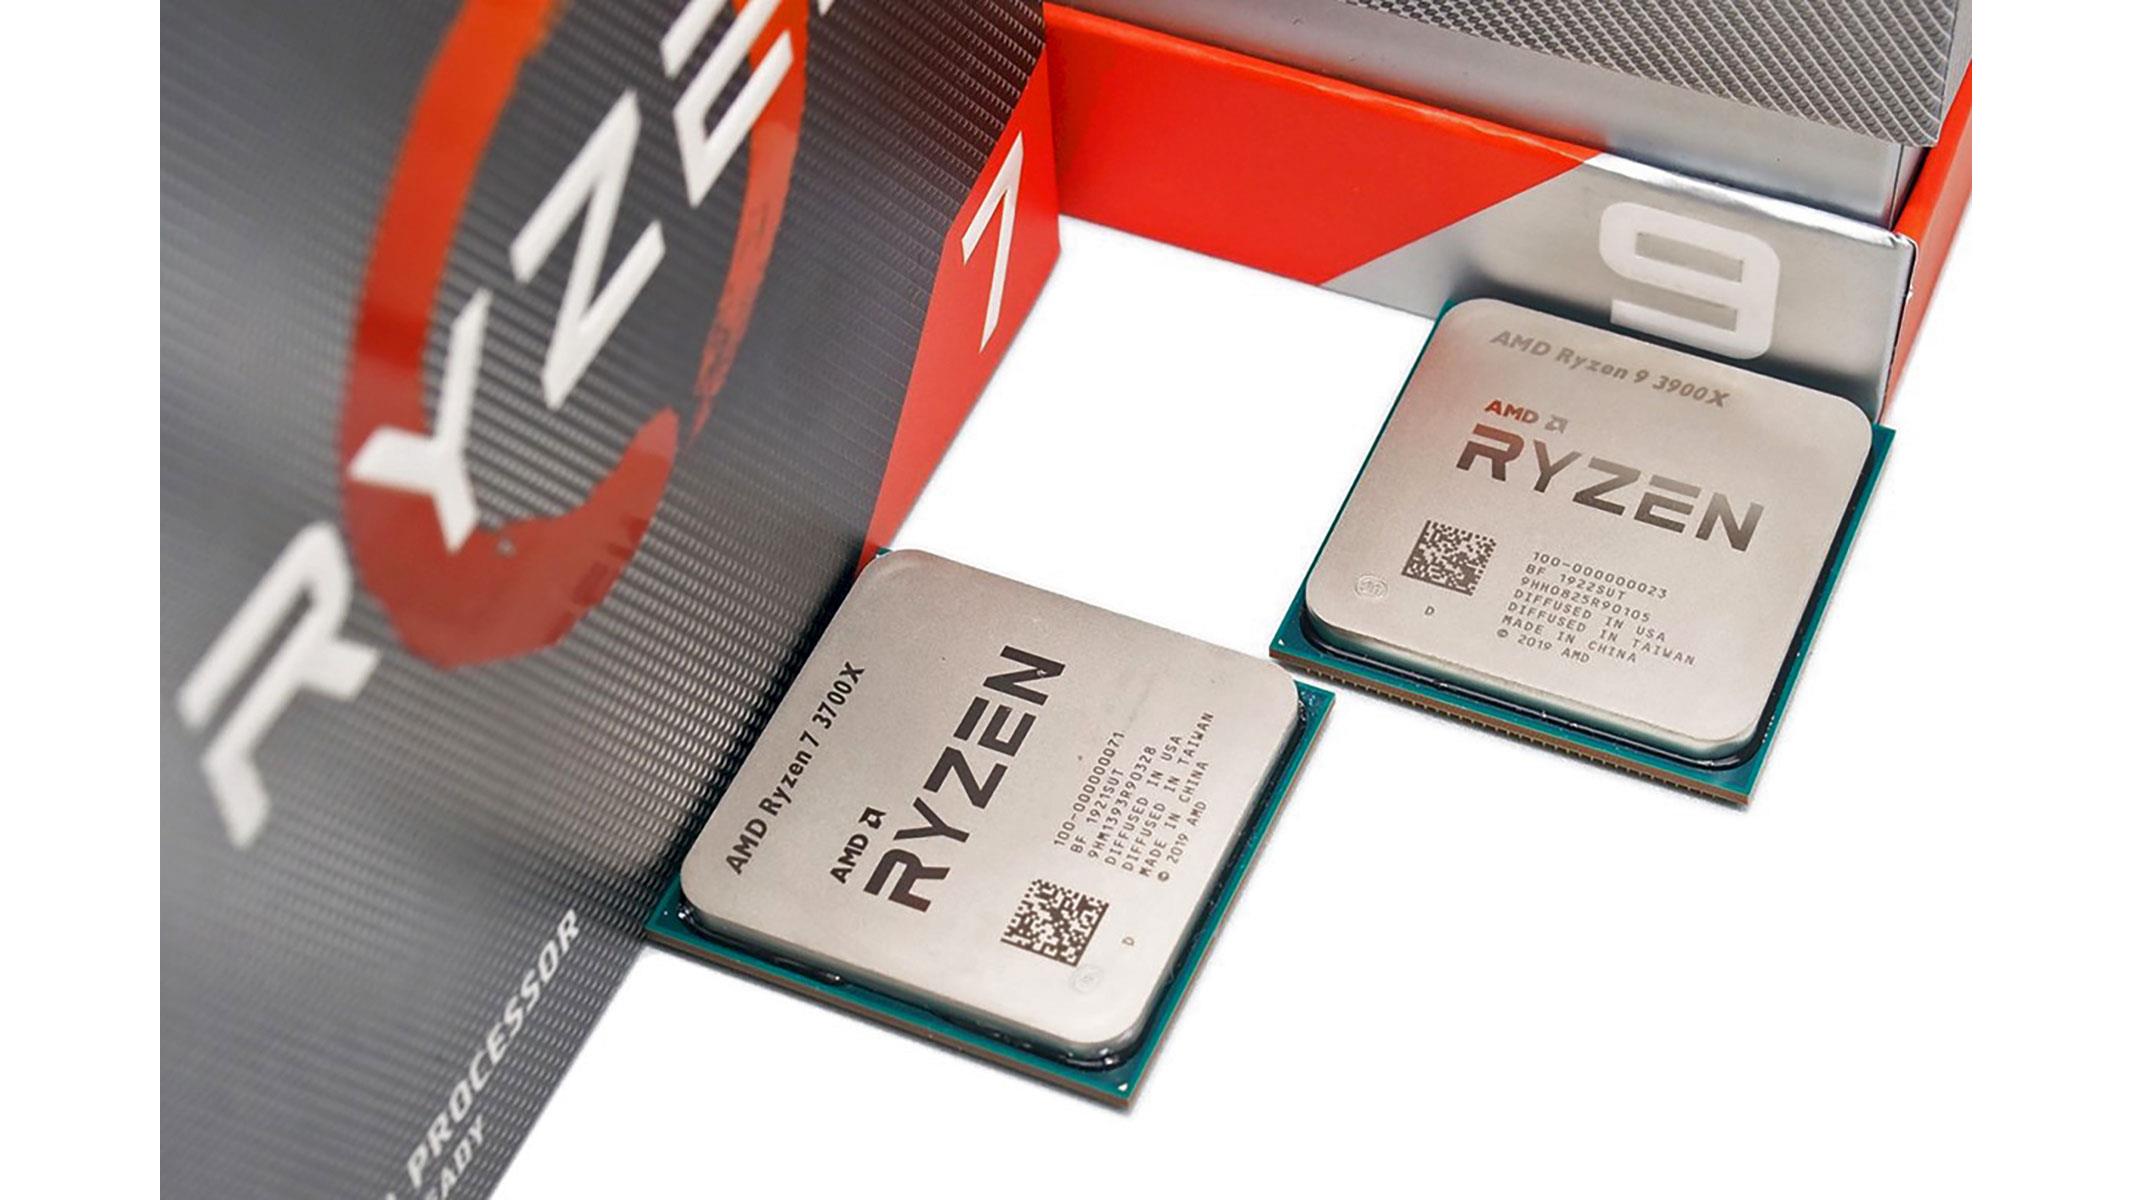 Amd ryzen 7 3700x купить. AMD Ryzen 9 3900x. AMD Ryzen 7 3700x. AMD Ryzen 7 3700u (2.3 ГГЦ). AMD Ryzen 9 5950x Box.